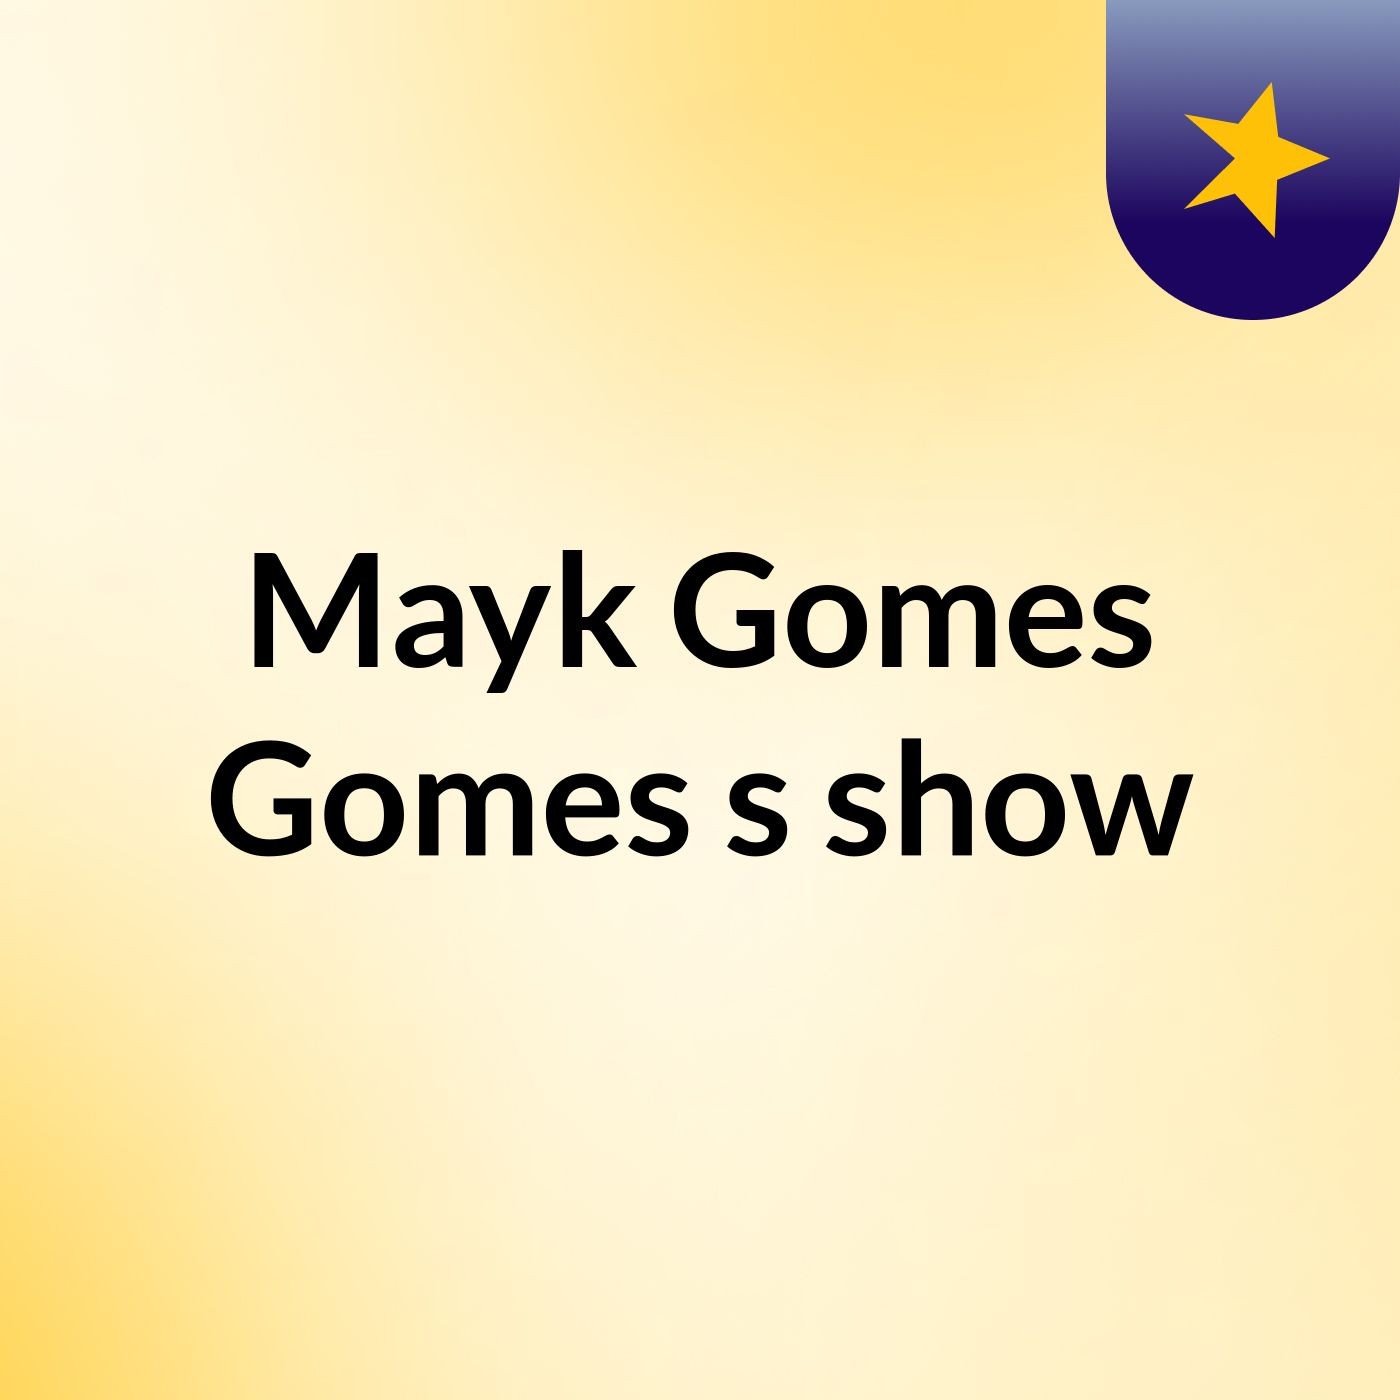 Mayk Gomes Gomes's show